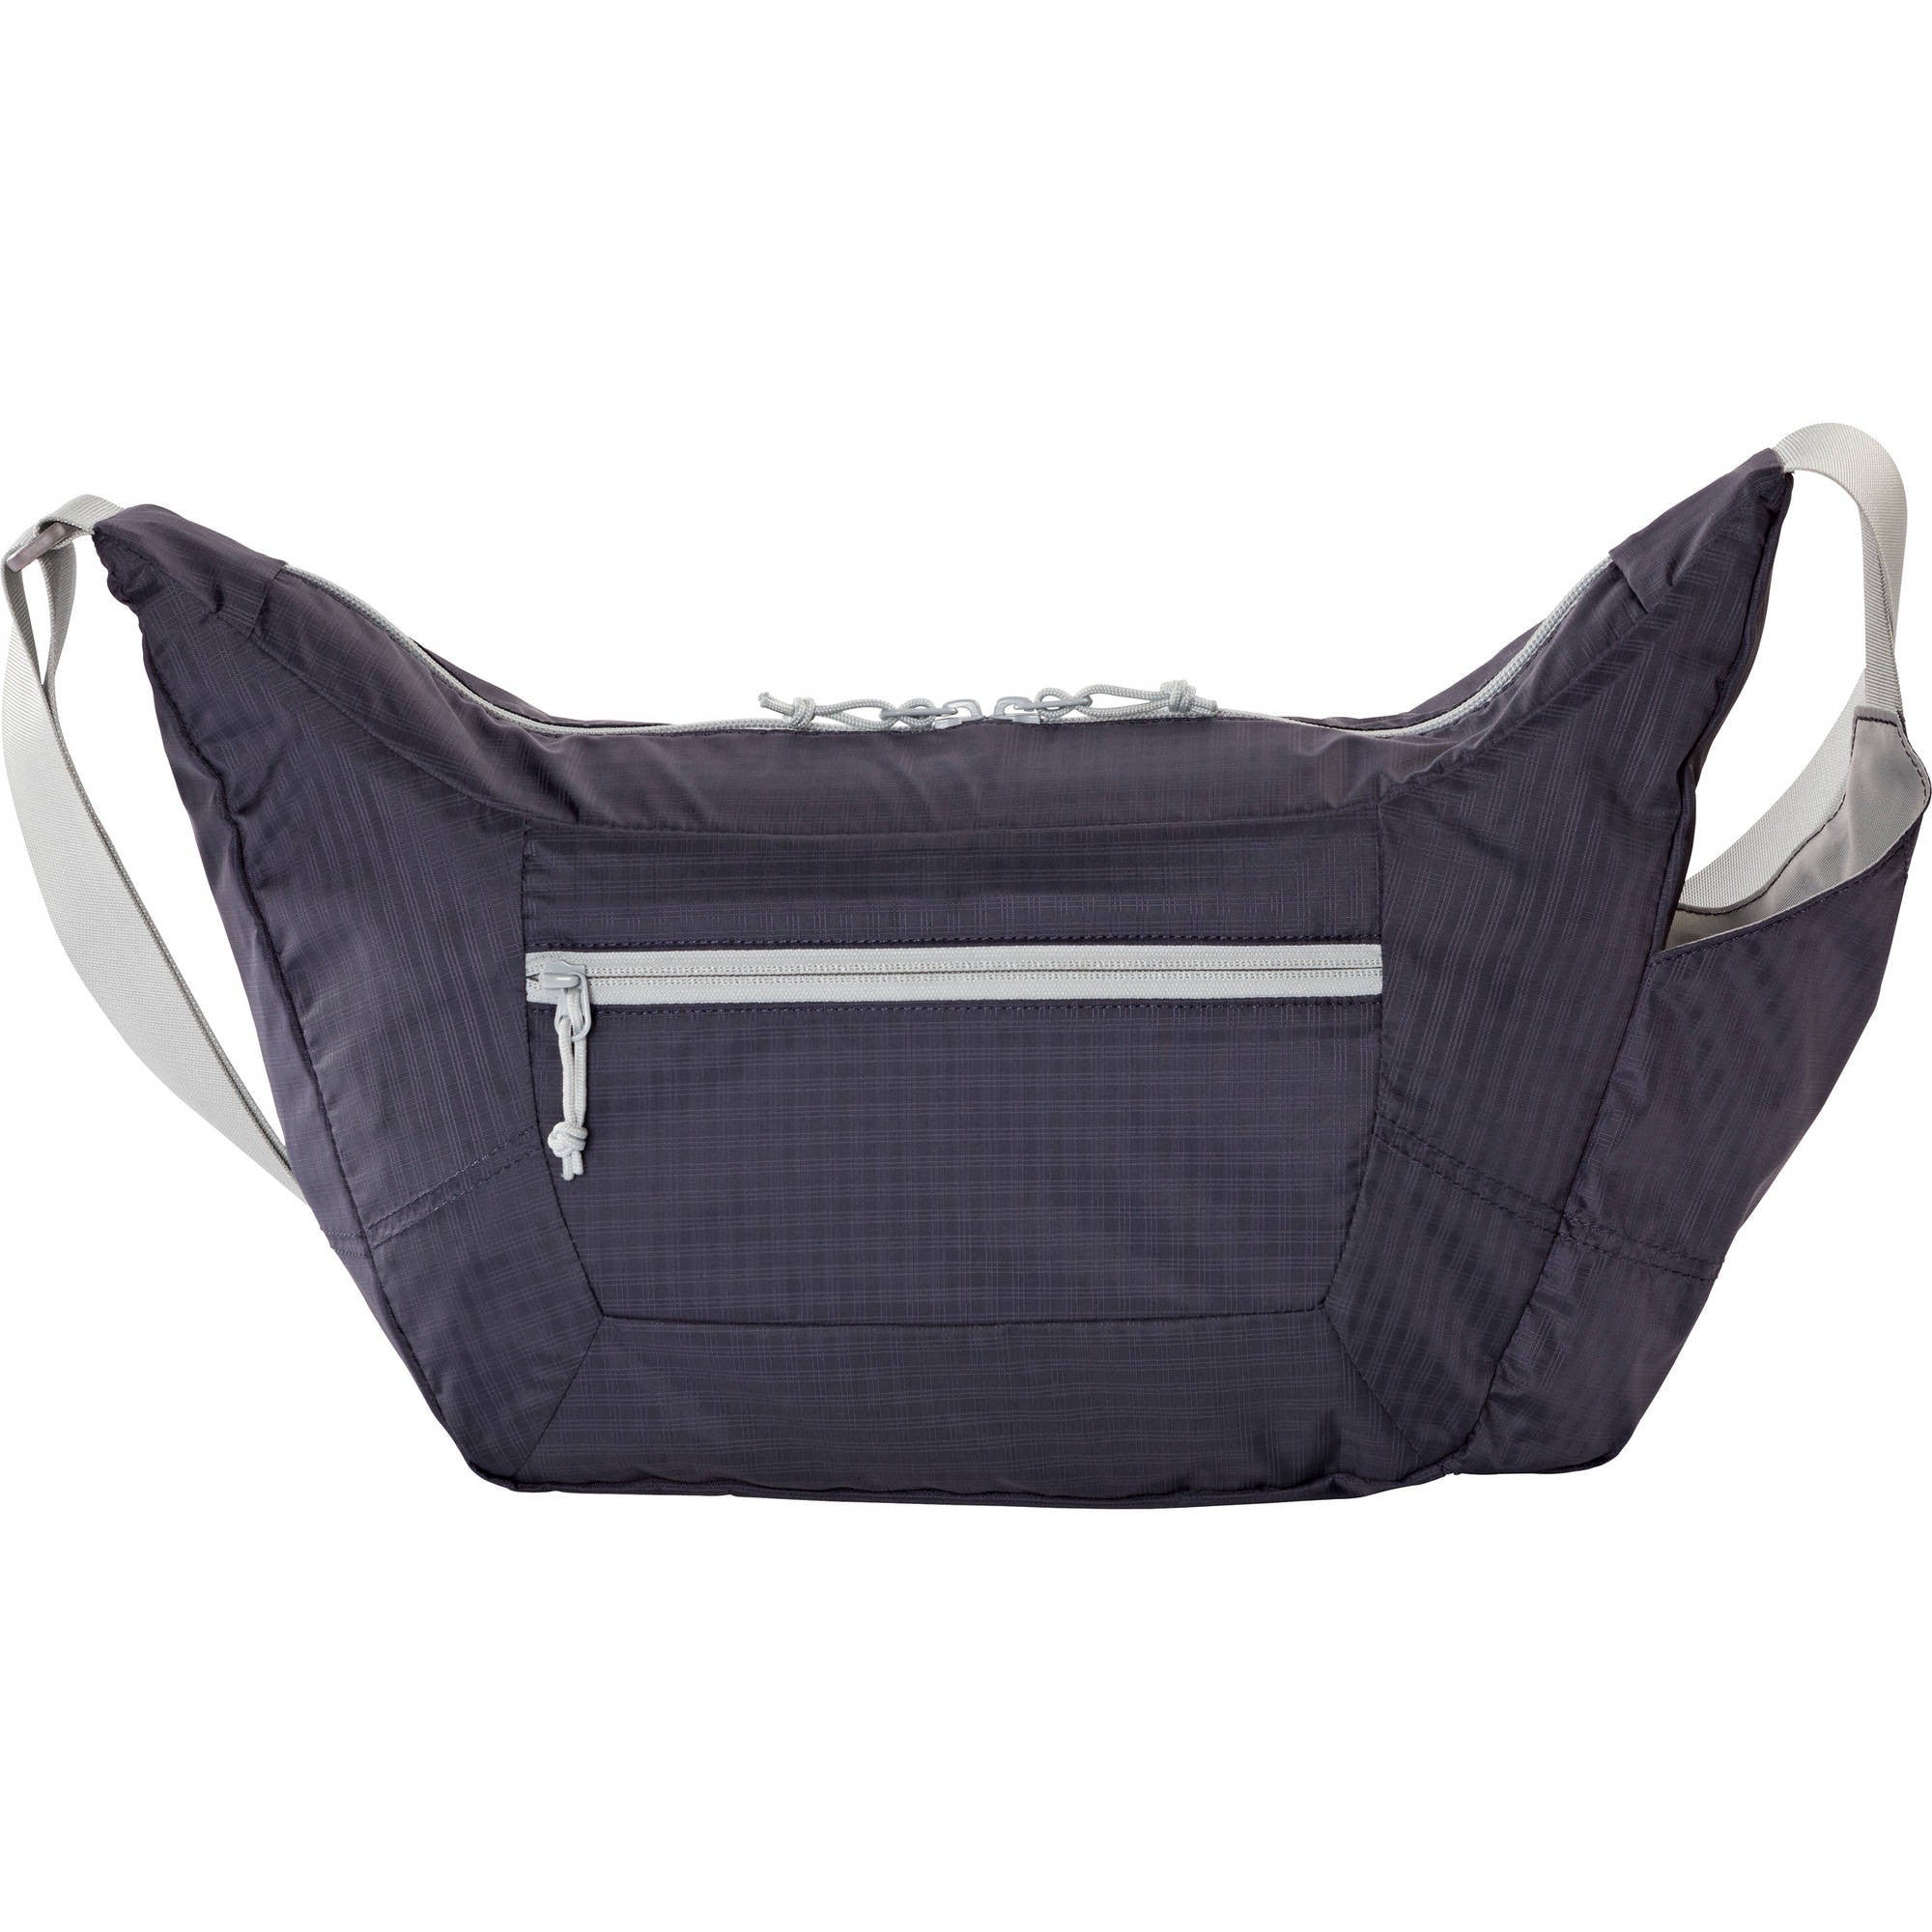 Lowepro Photo Sport Shoulder 12L Camera Bag (Purple/Grey), bags shoulder bags, Lowepro - Pictureline  - 1